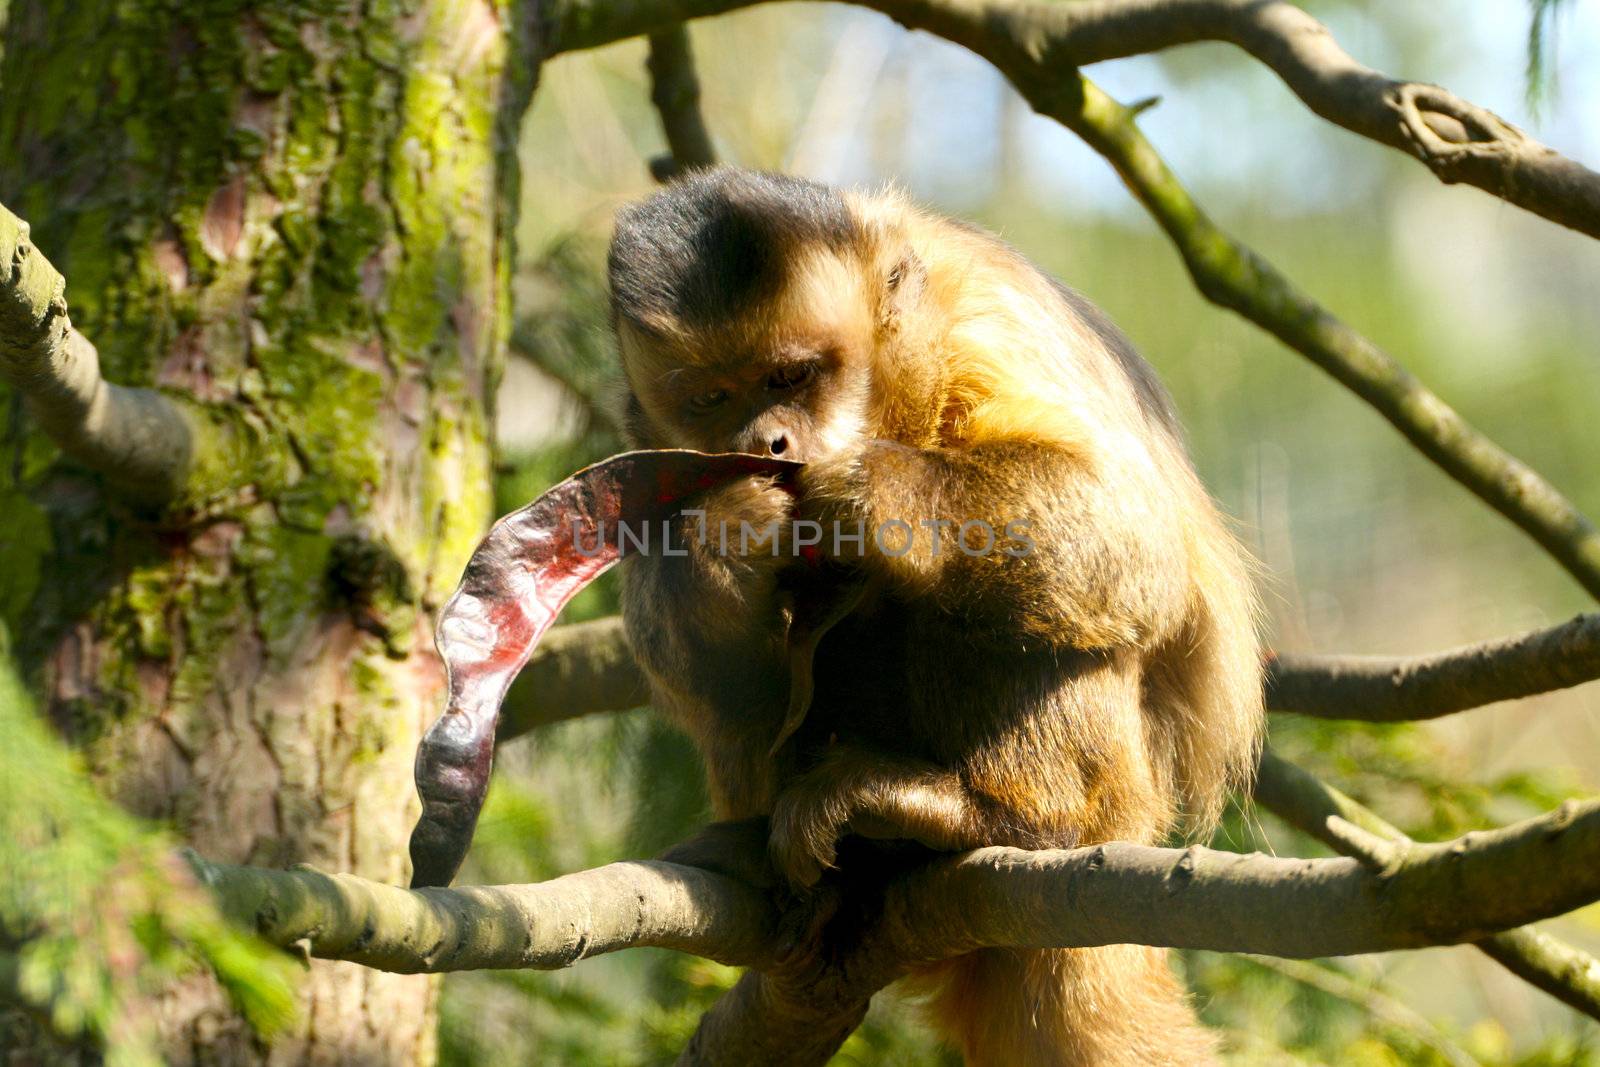 Monkey eating a locust